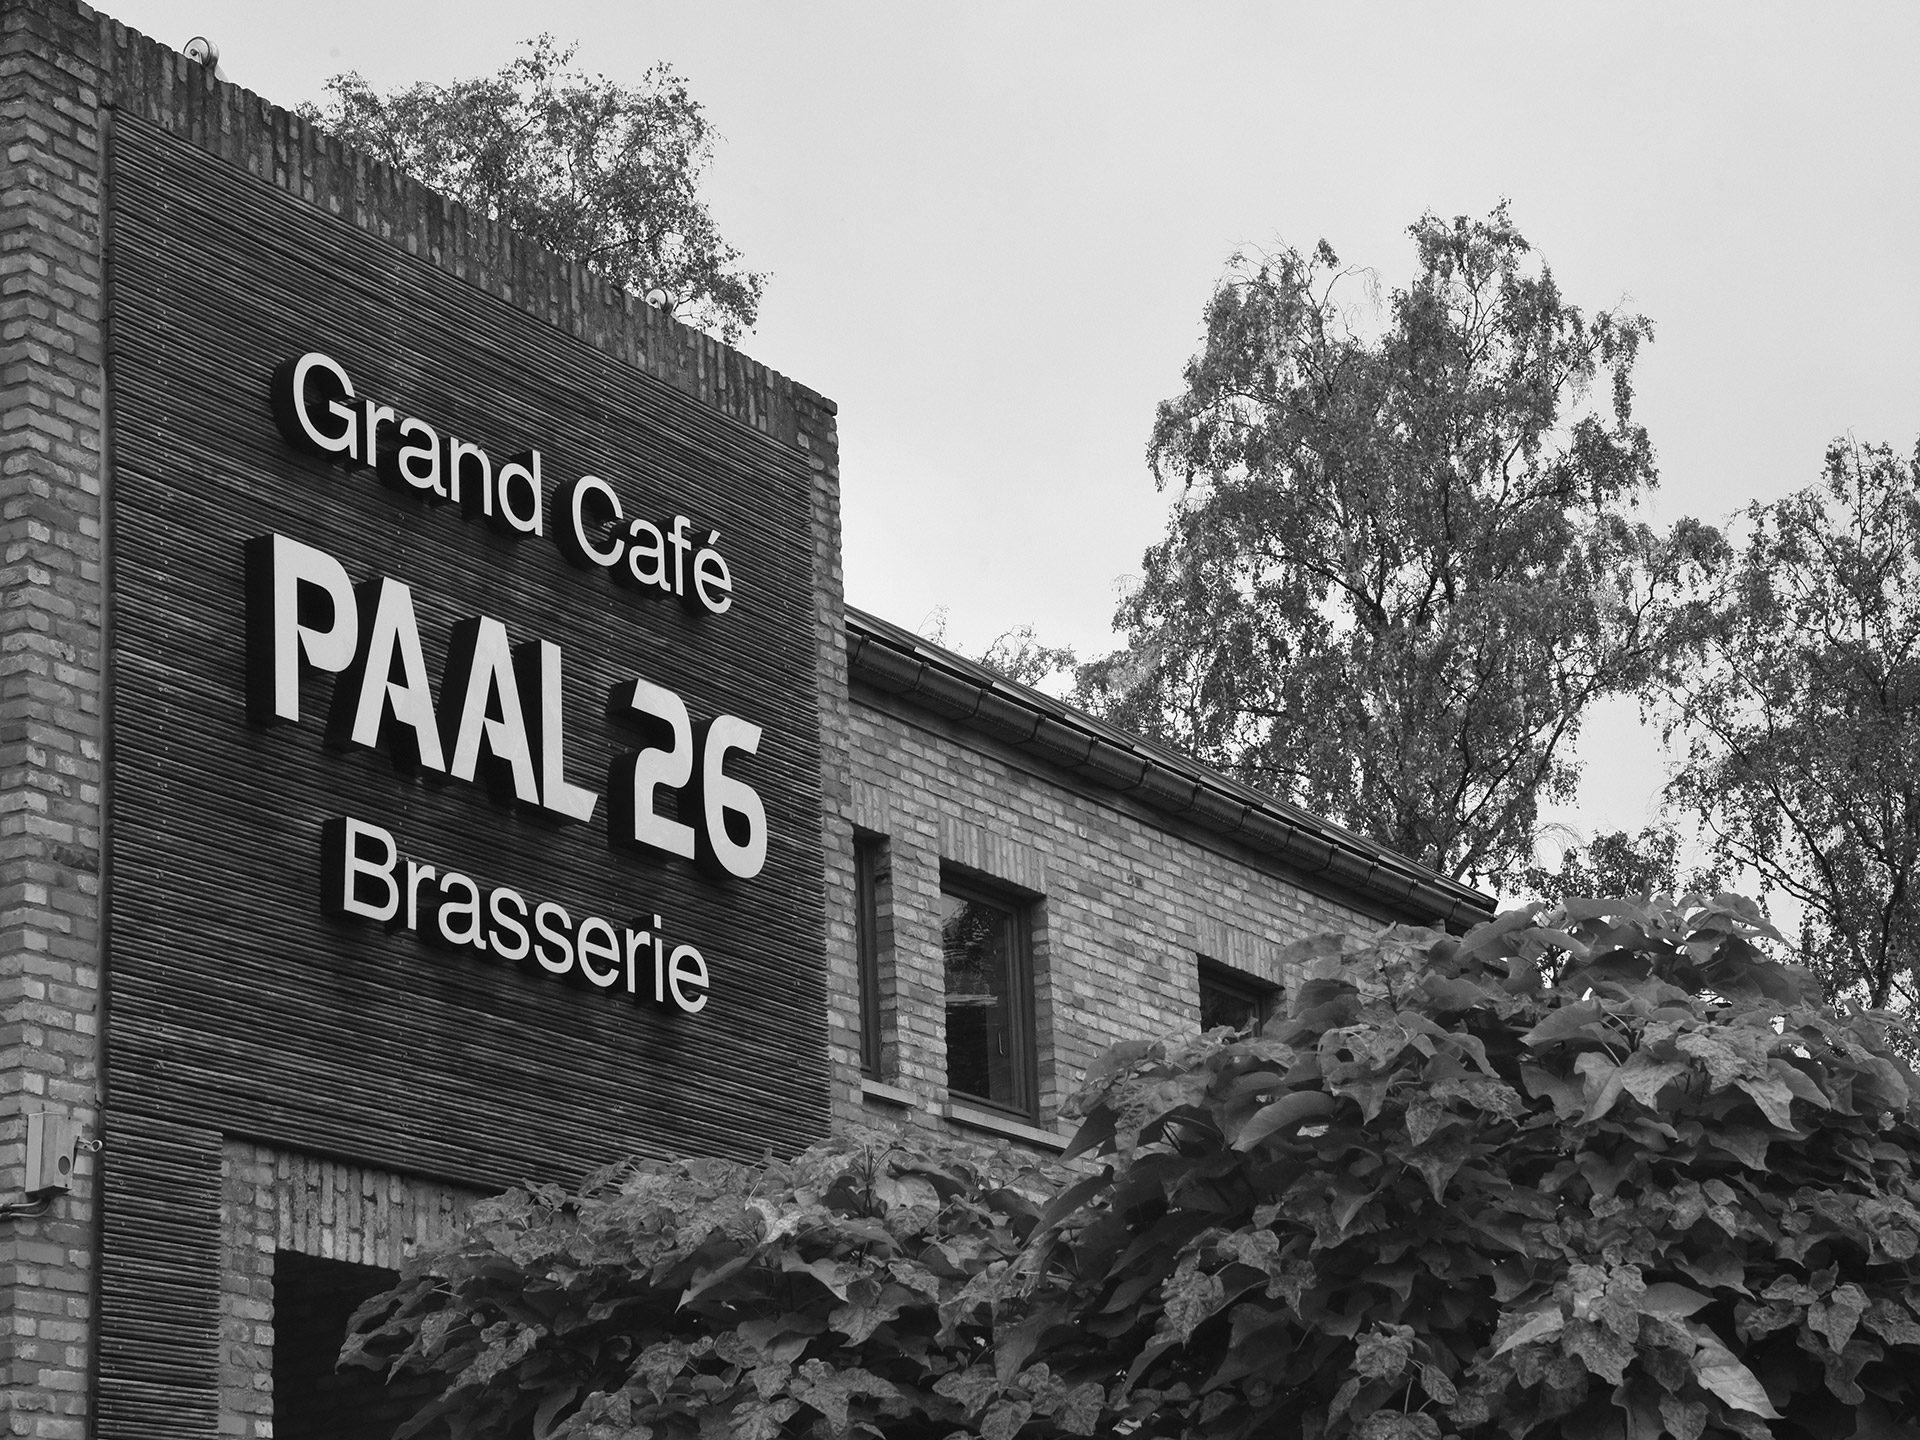 Photo Album - Grand Café Paal 26